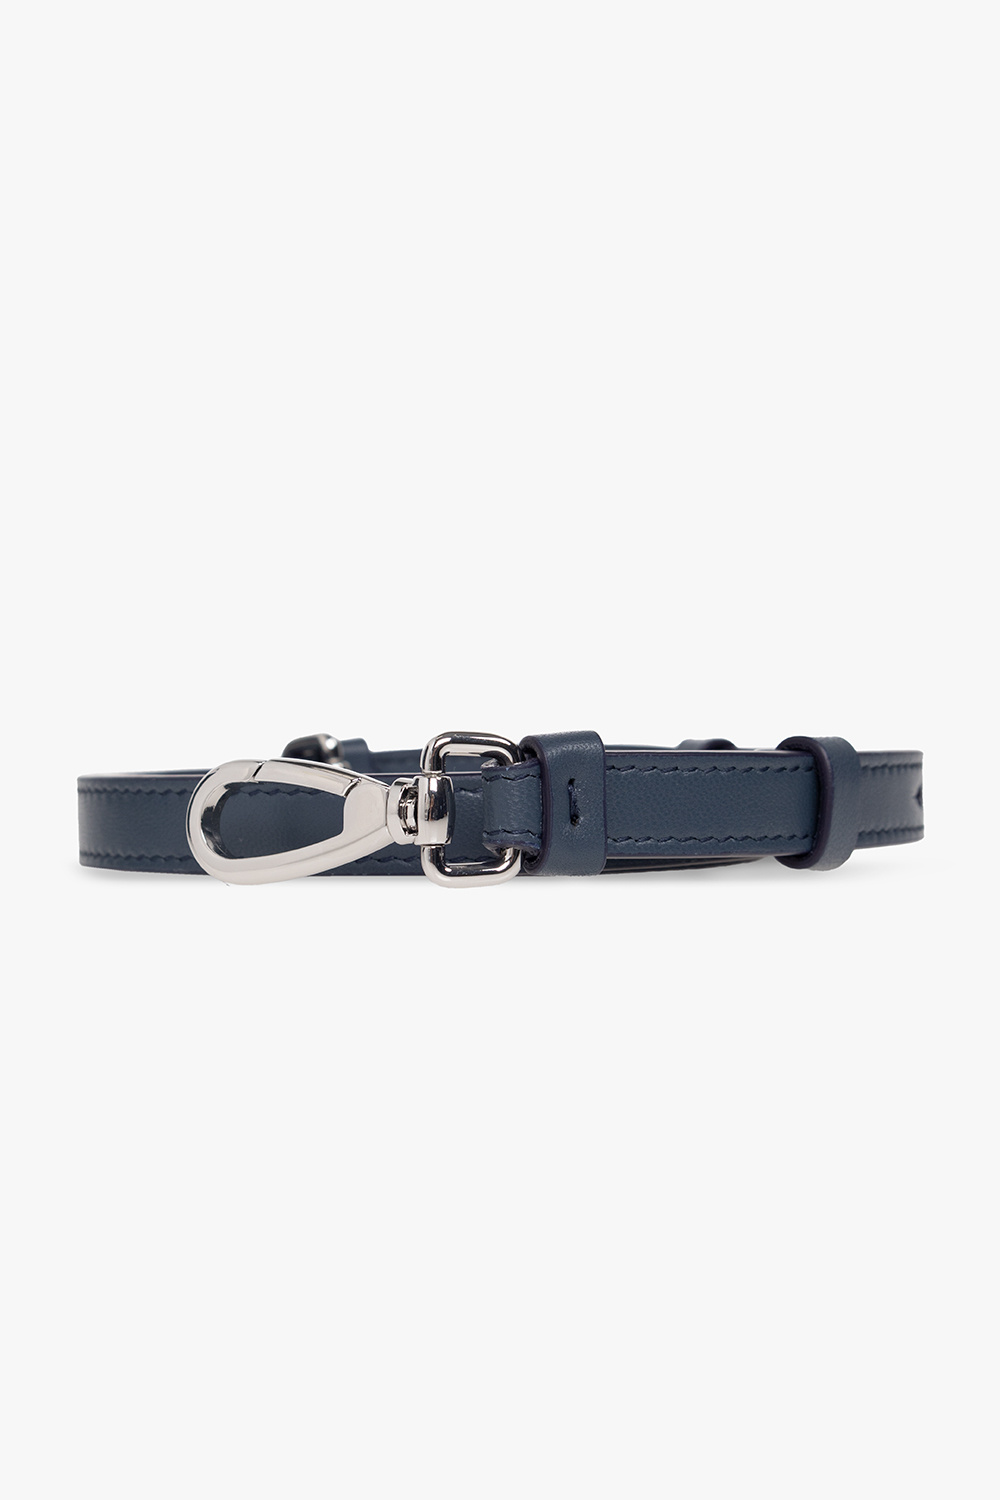 Louis Vuitton Adjustable Shoulder Strap 16 mm Epi, Blue, One Size